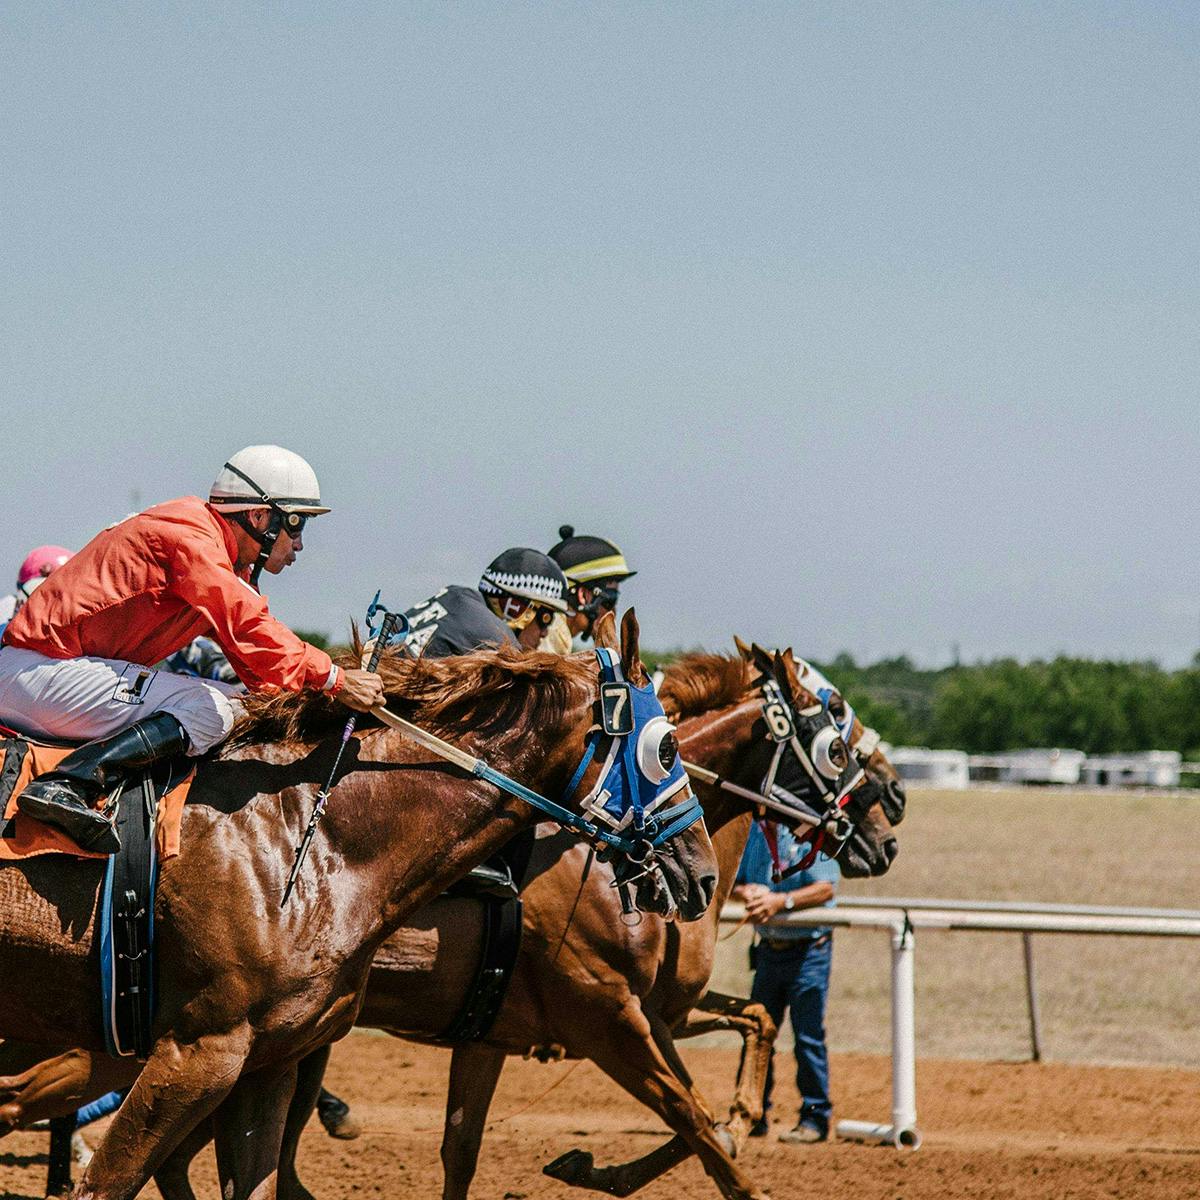 Jockeys on horse back racing